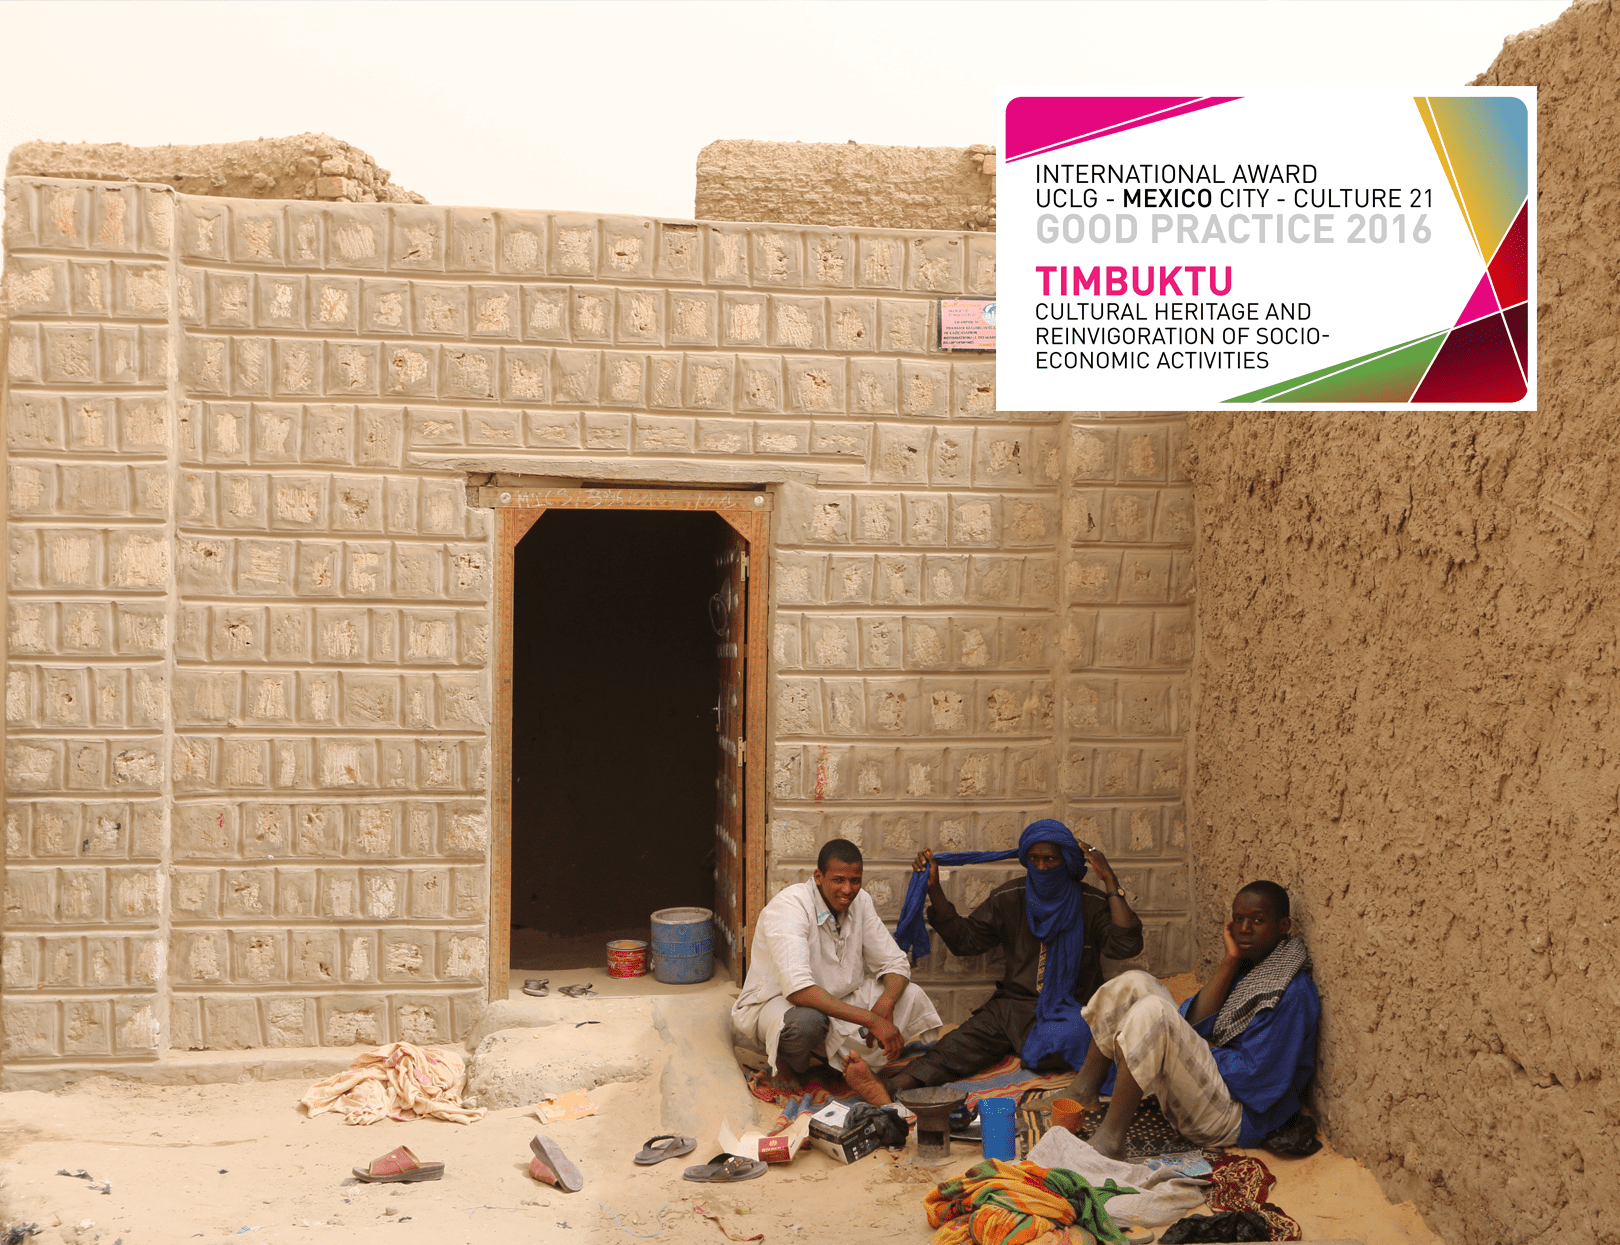 Cultural heritage and reinvigoration of socio-economic activities in Timbuktu